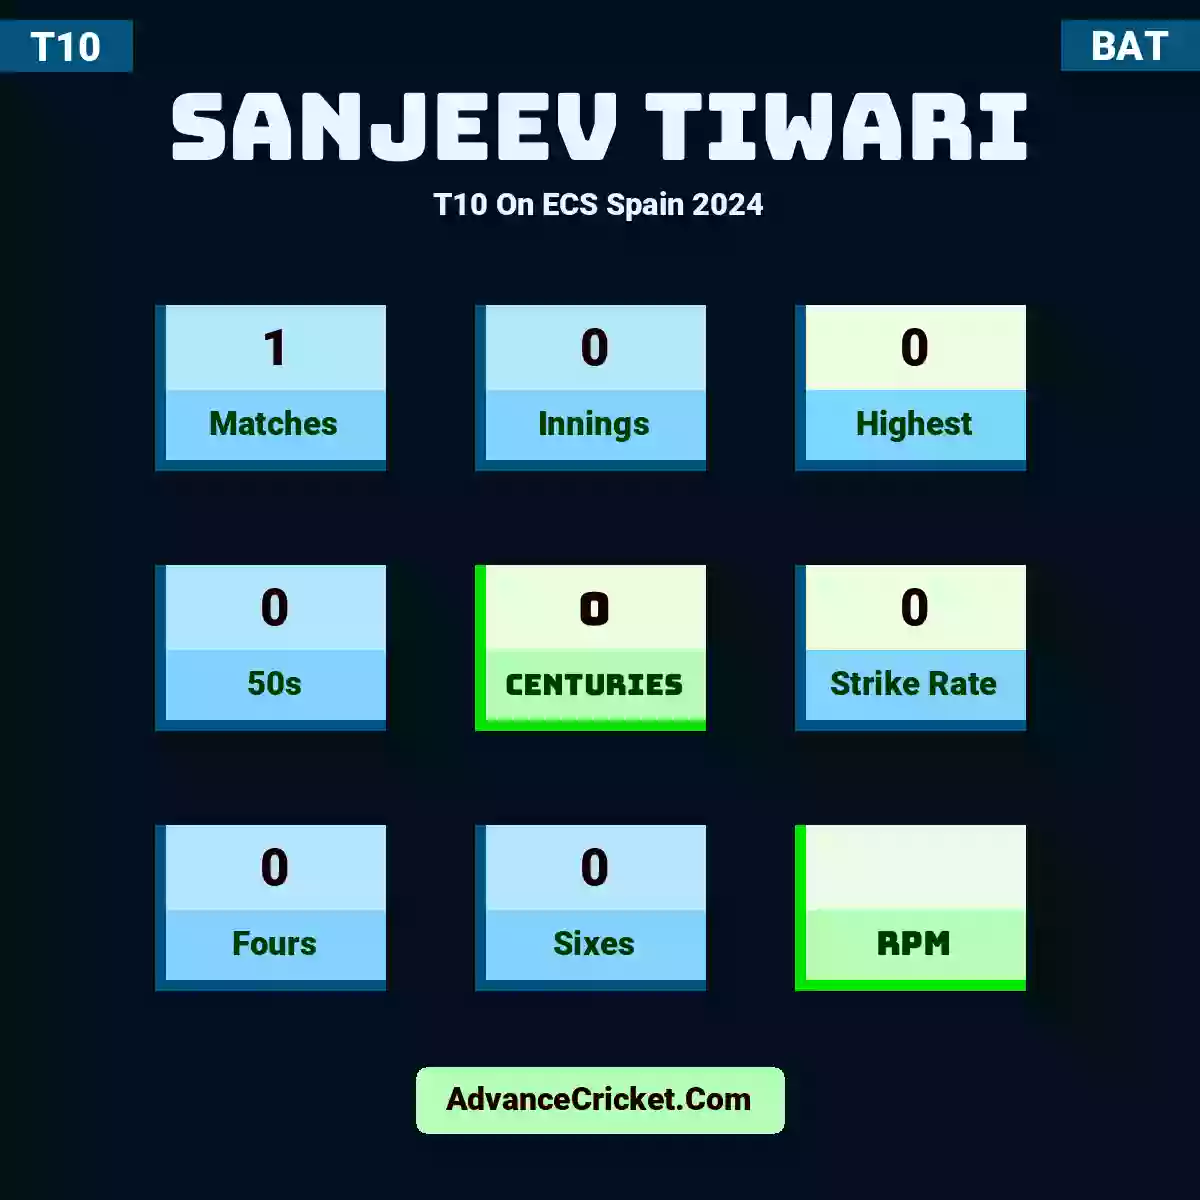 Sanjeev Tiwari T10  On ECS Spain 2024, Sanjeev Tiwari played 1 matches, scored 0 runs as highest, 0 half-centuries, and 0 centuries, with a strike rate of 0. S.Tiwari hit 0 fours and 0 sixes.